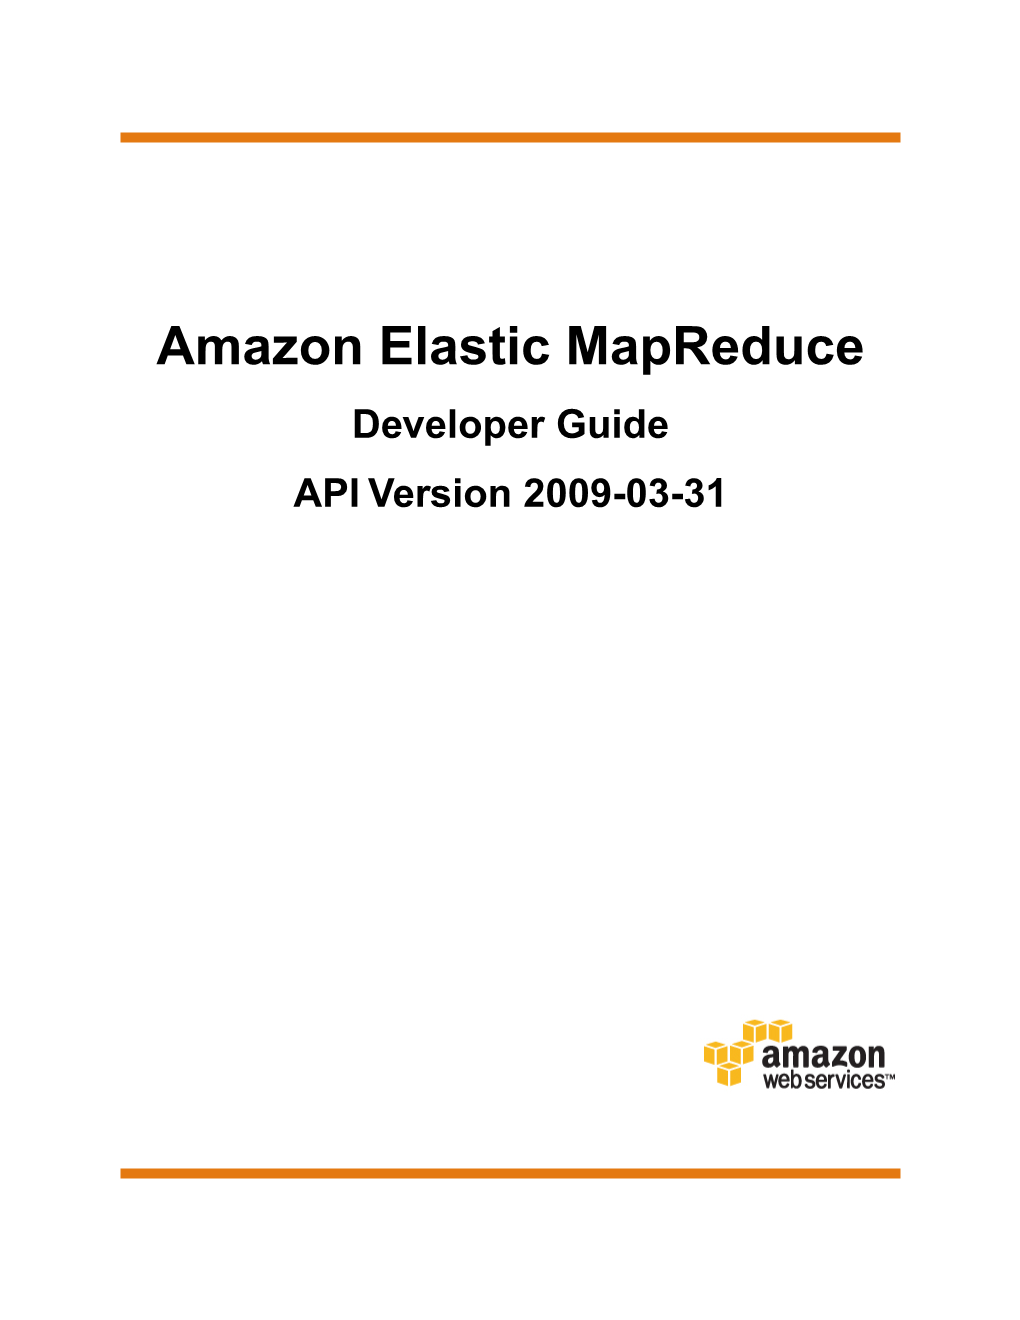 Amazon Elastic Mapreduce Developer Guide API Version 2009-03-31 Amazon Elastic Mapreduce Developer Guide